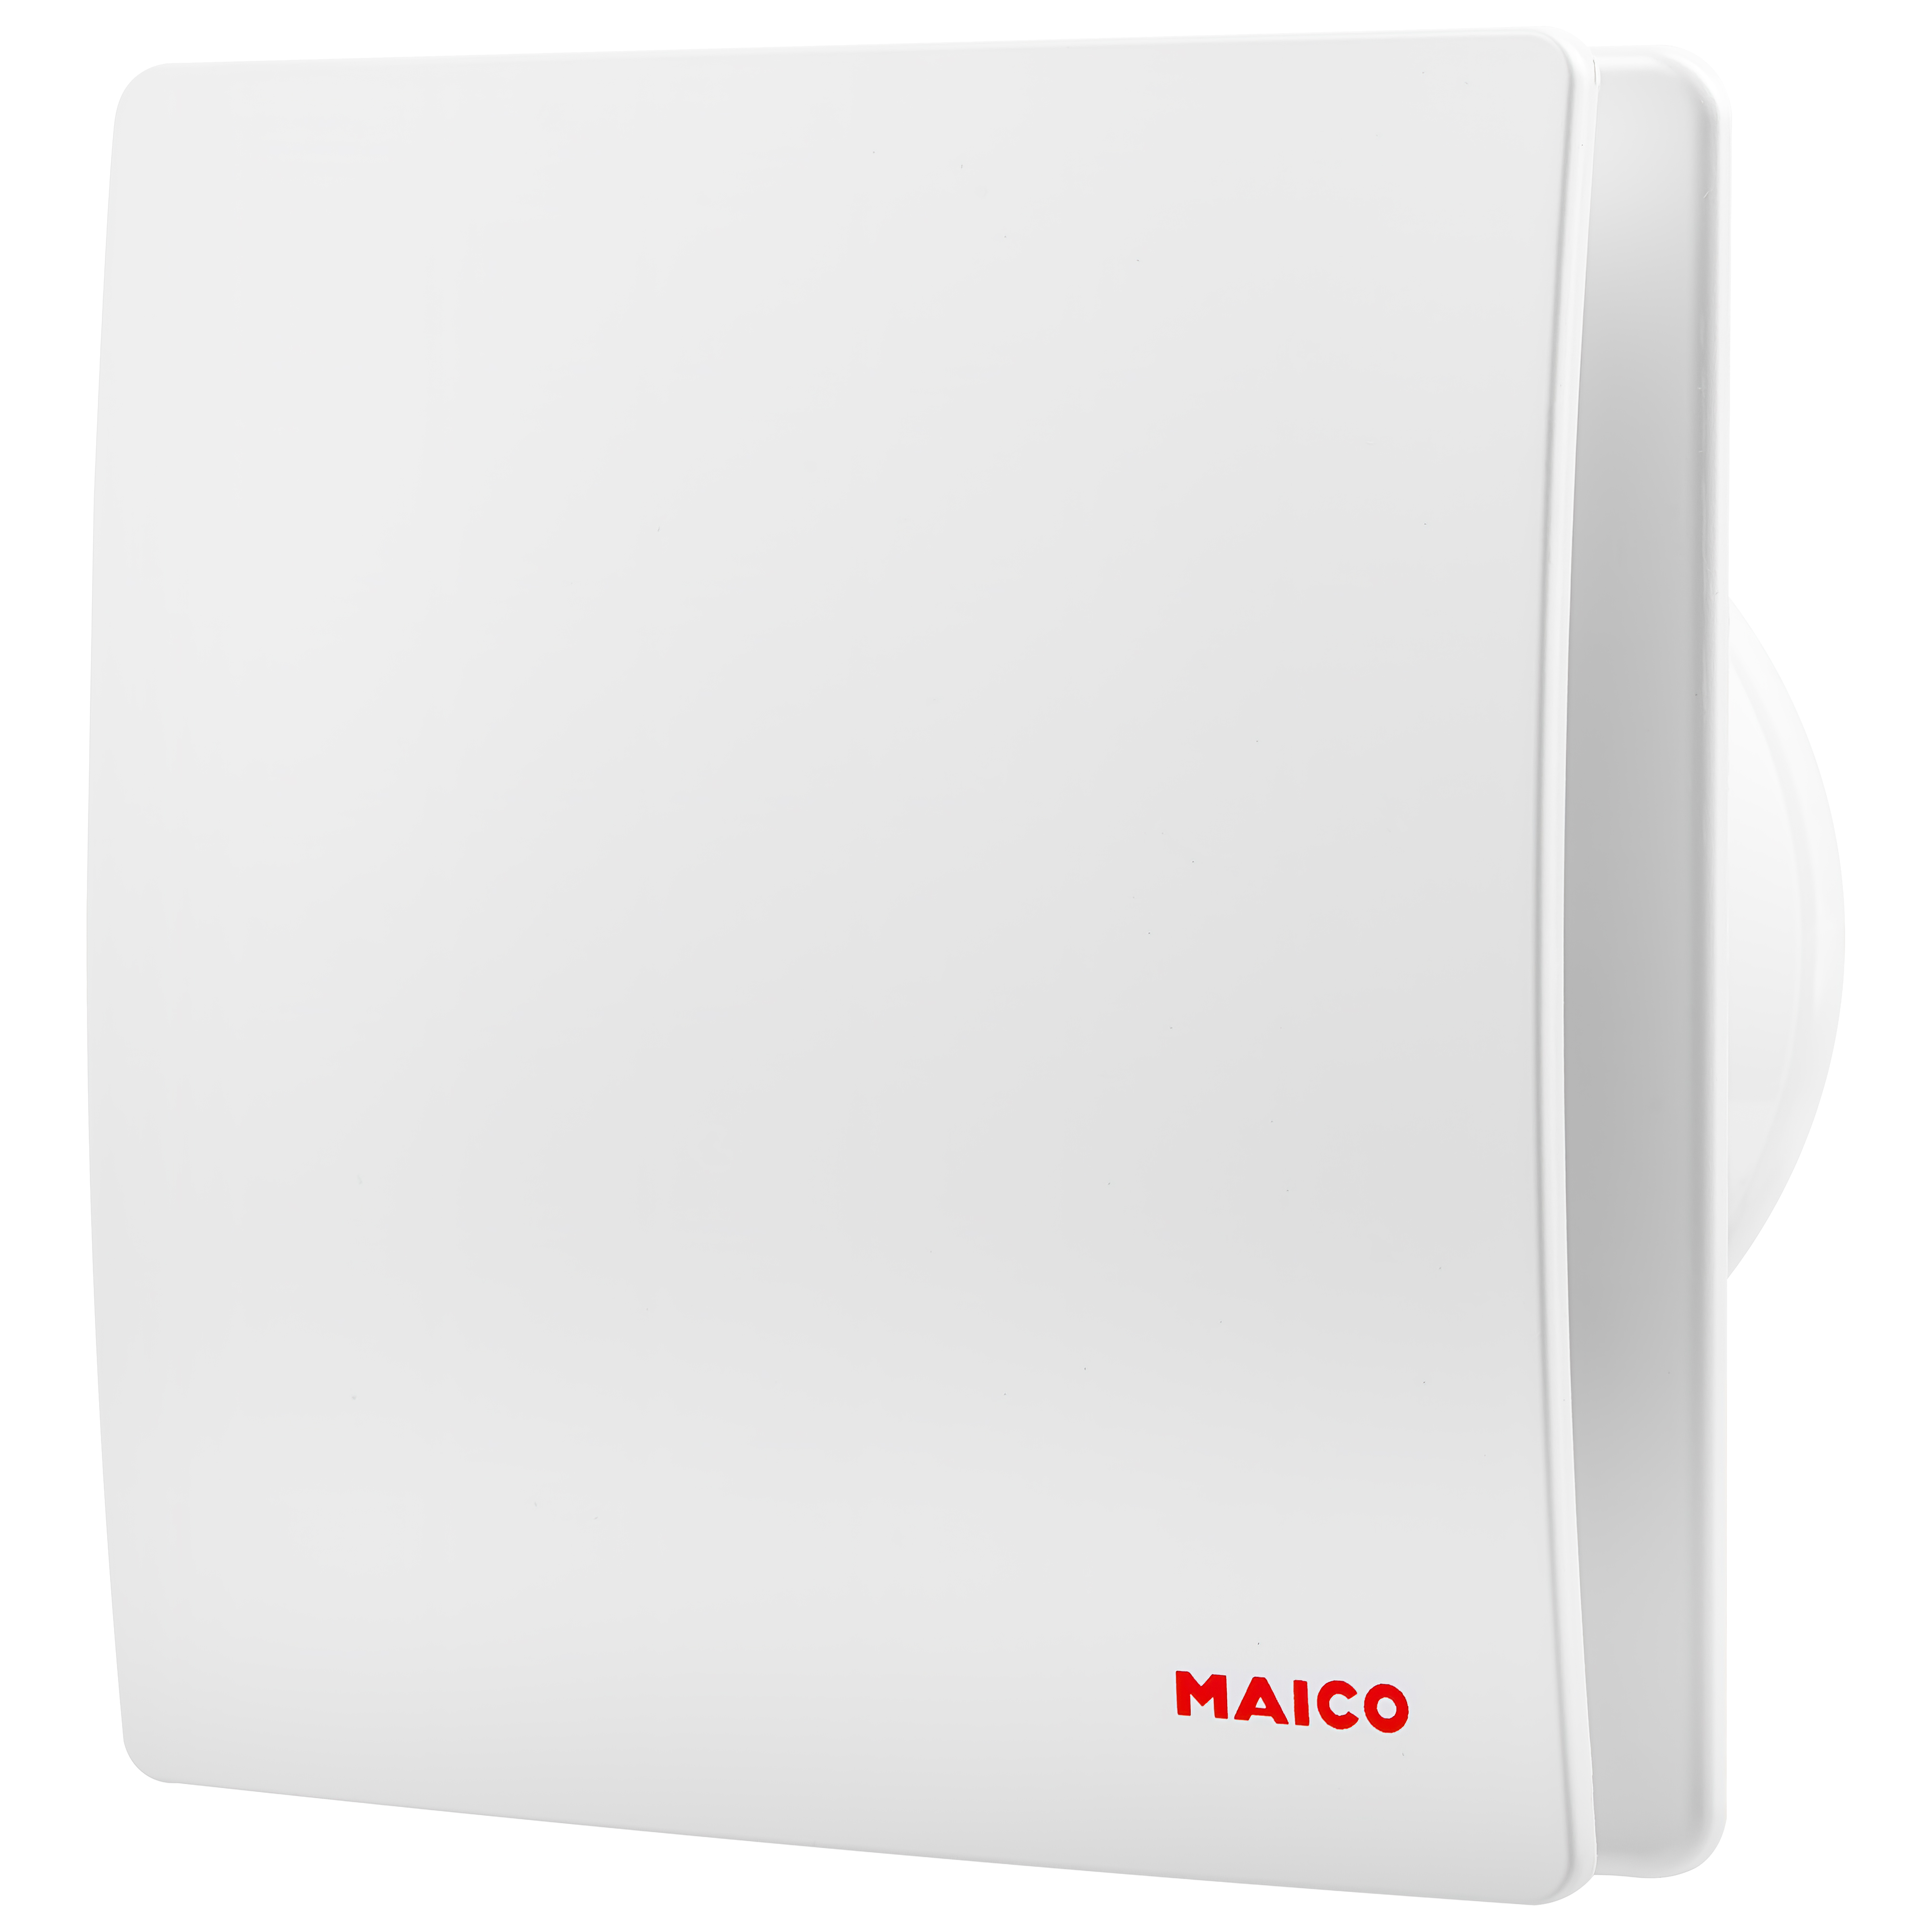 Вентилятор Maico с обратным клапаном Maico AWB 120 C